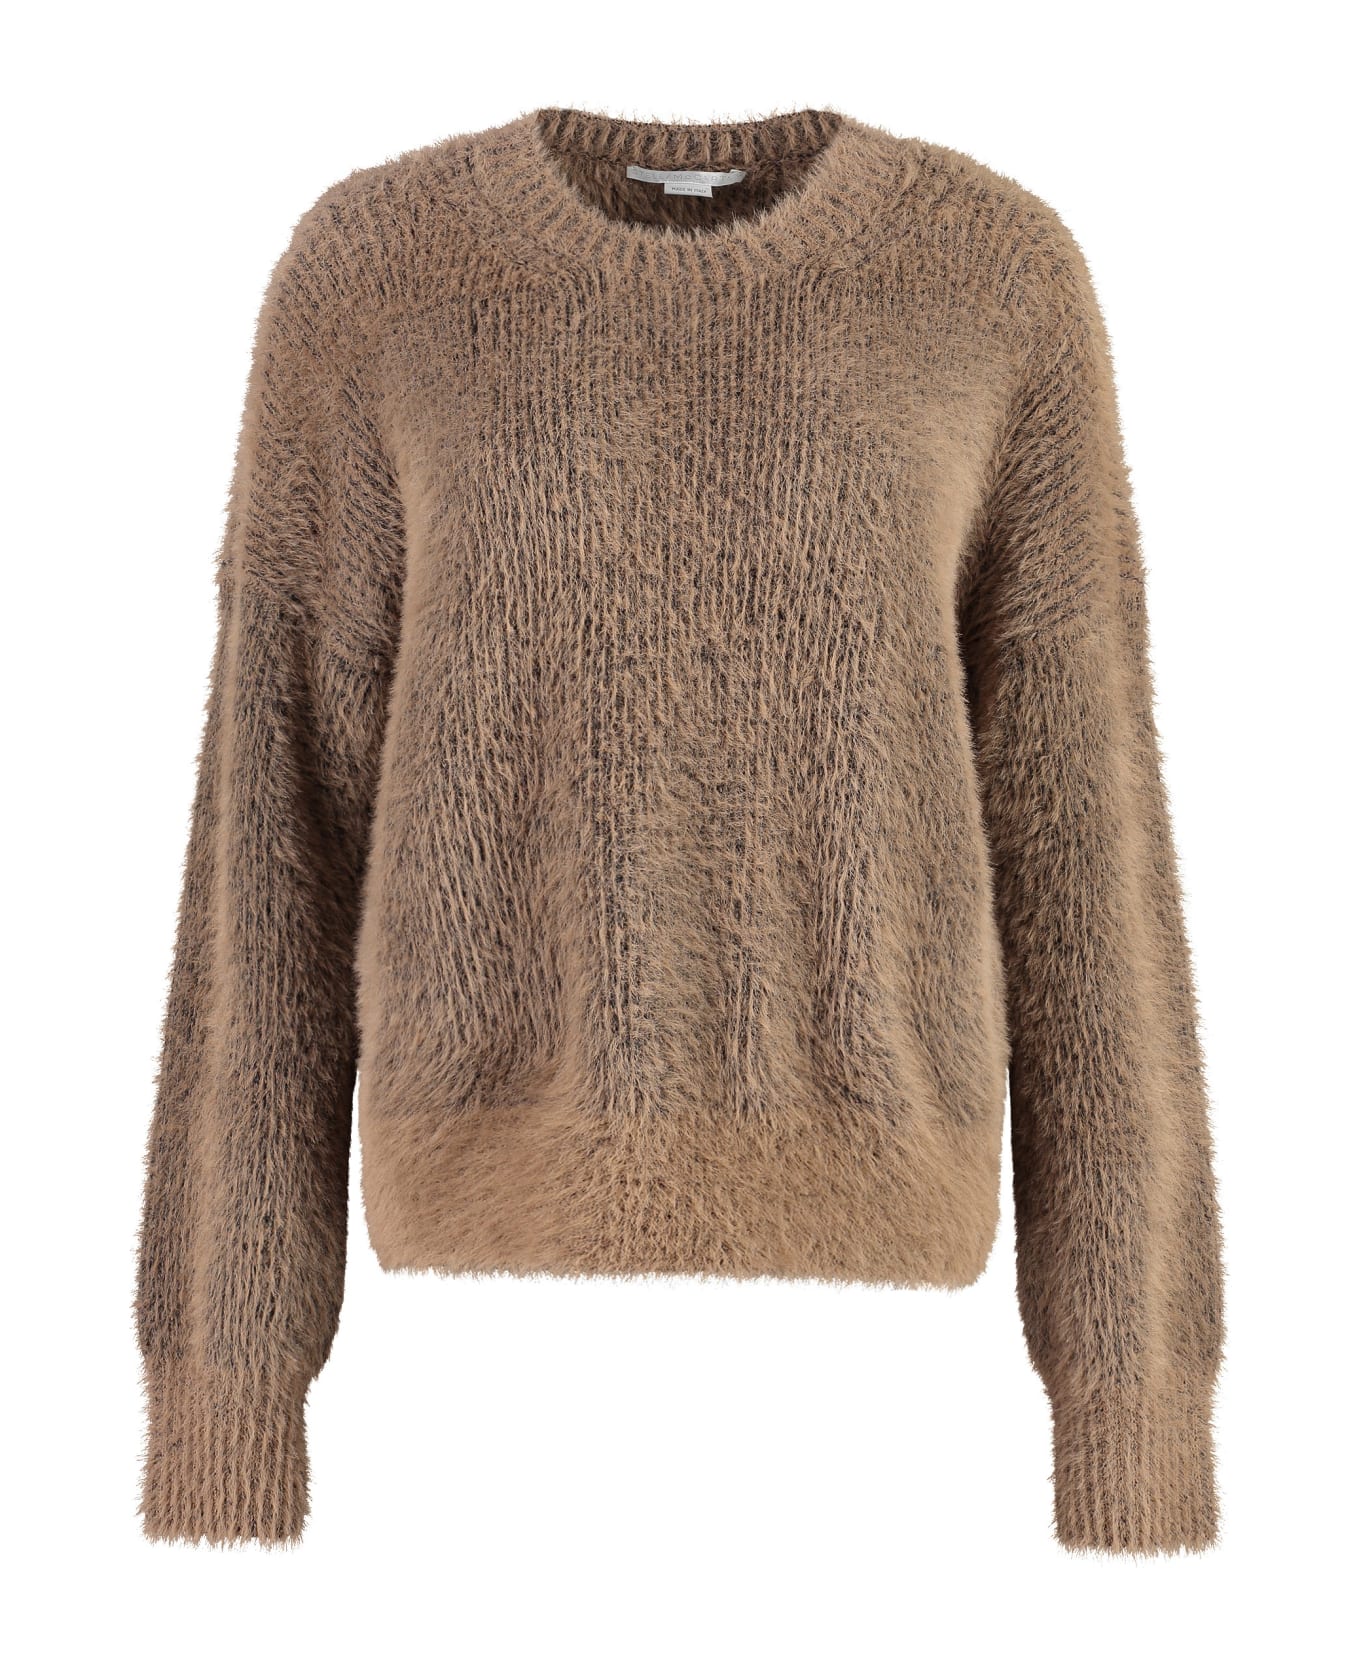 Stella McCartney Fluffy Long Sleeve Crew-neck Sweater - Camel